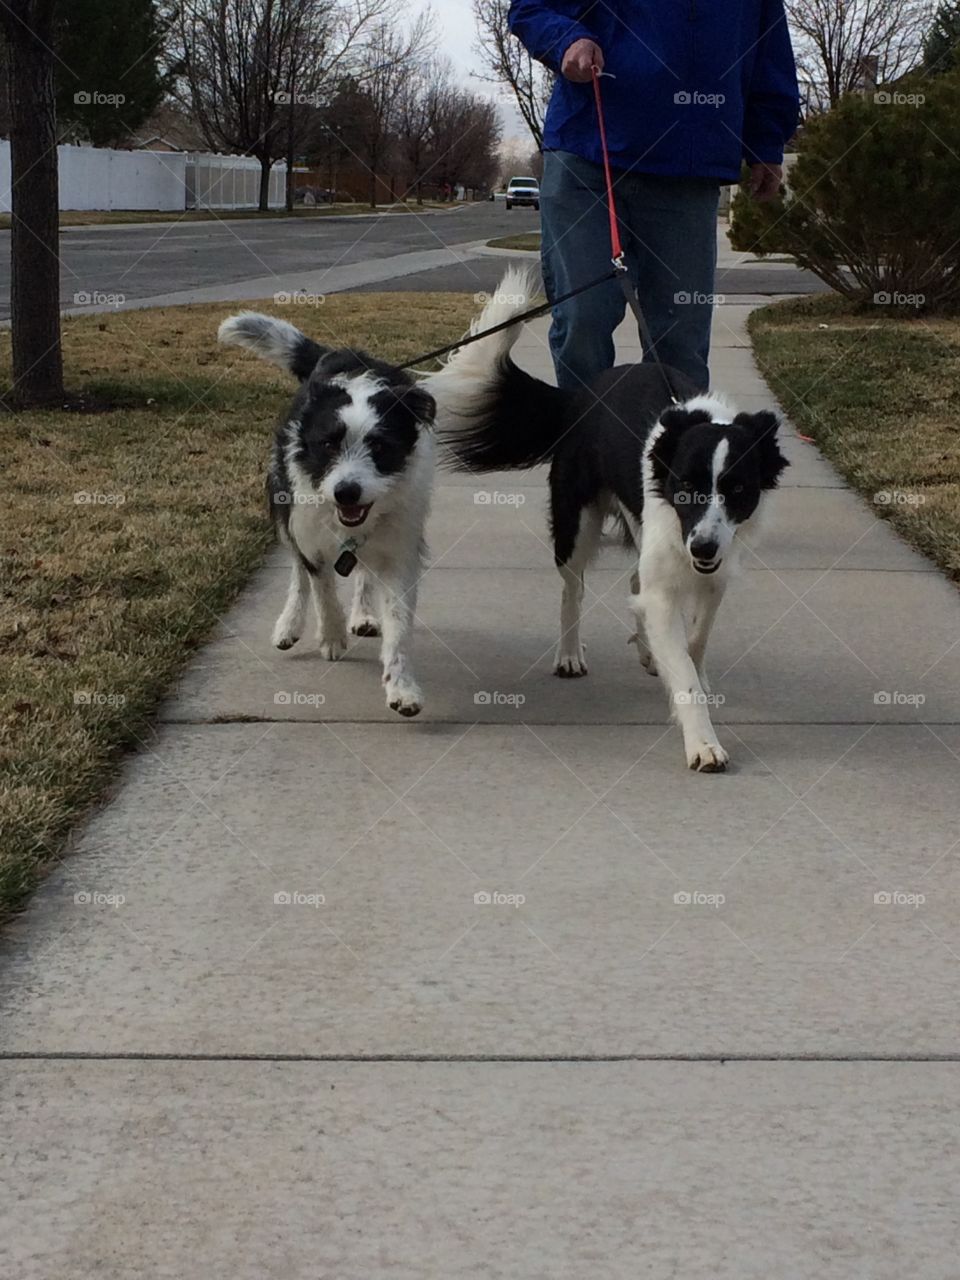 They love walks